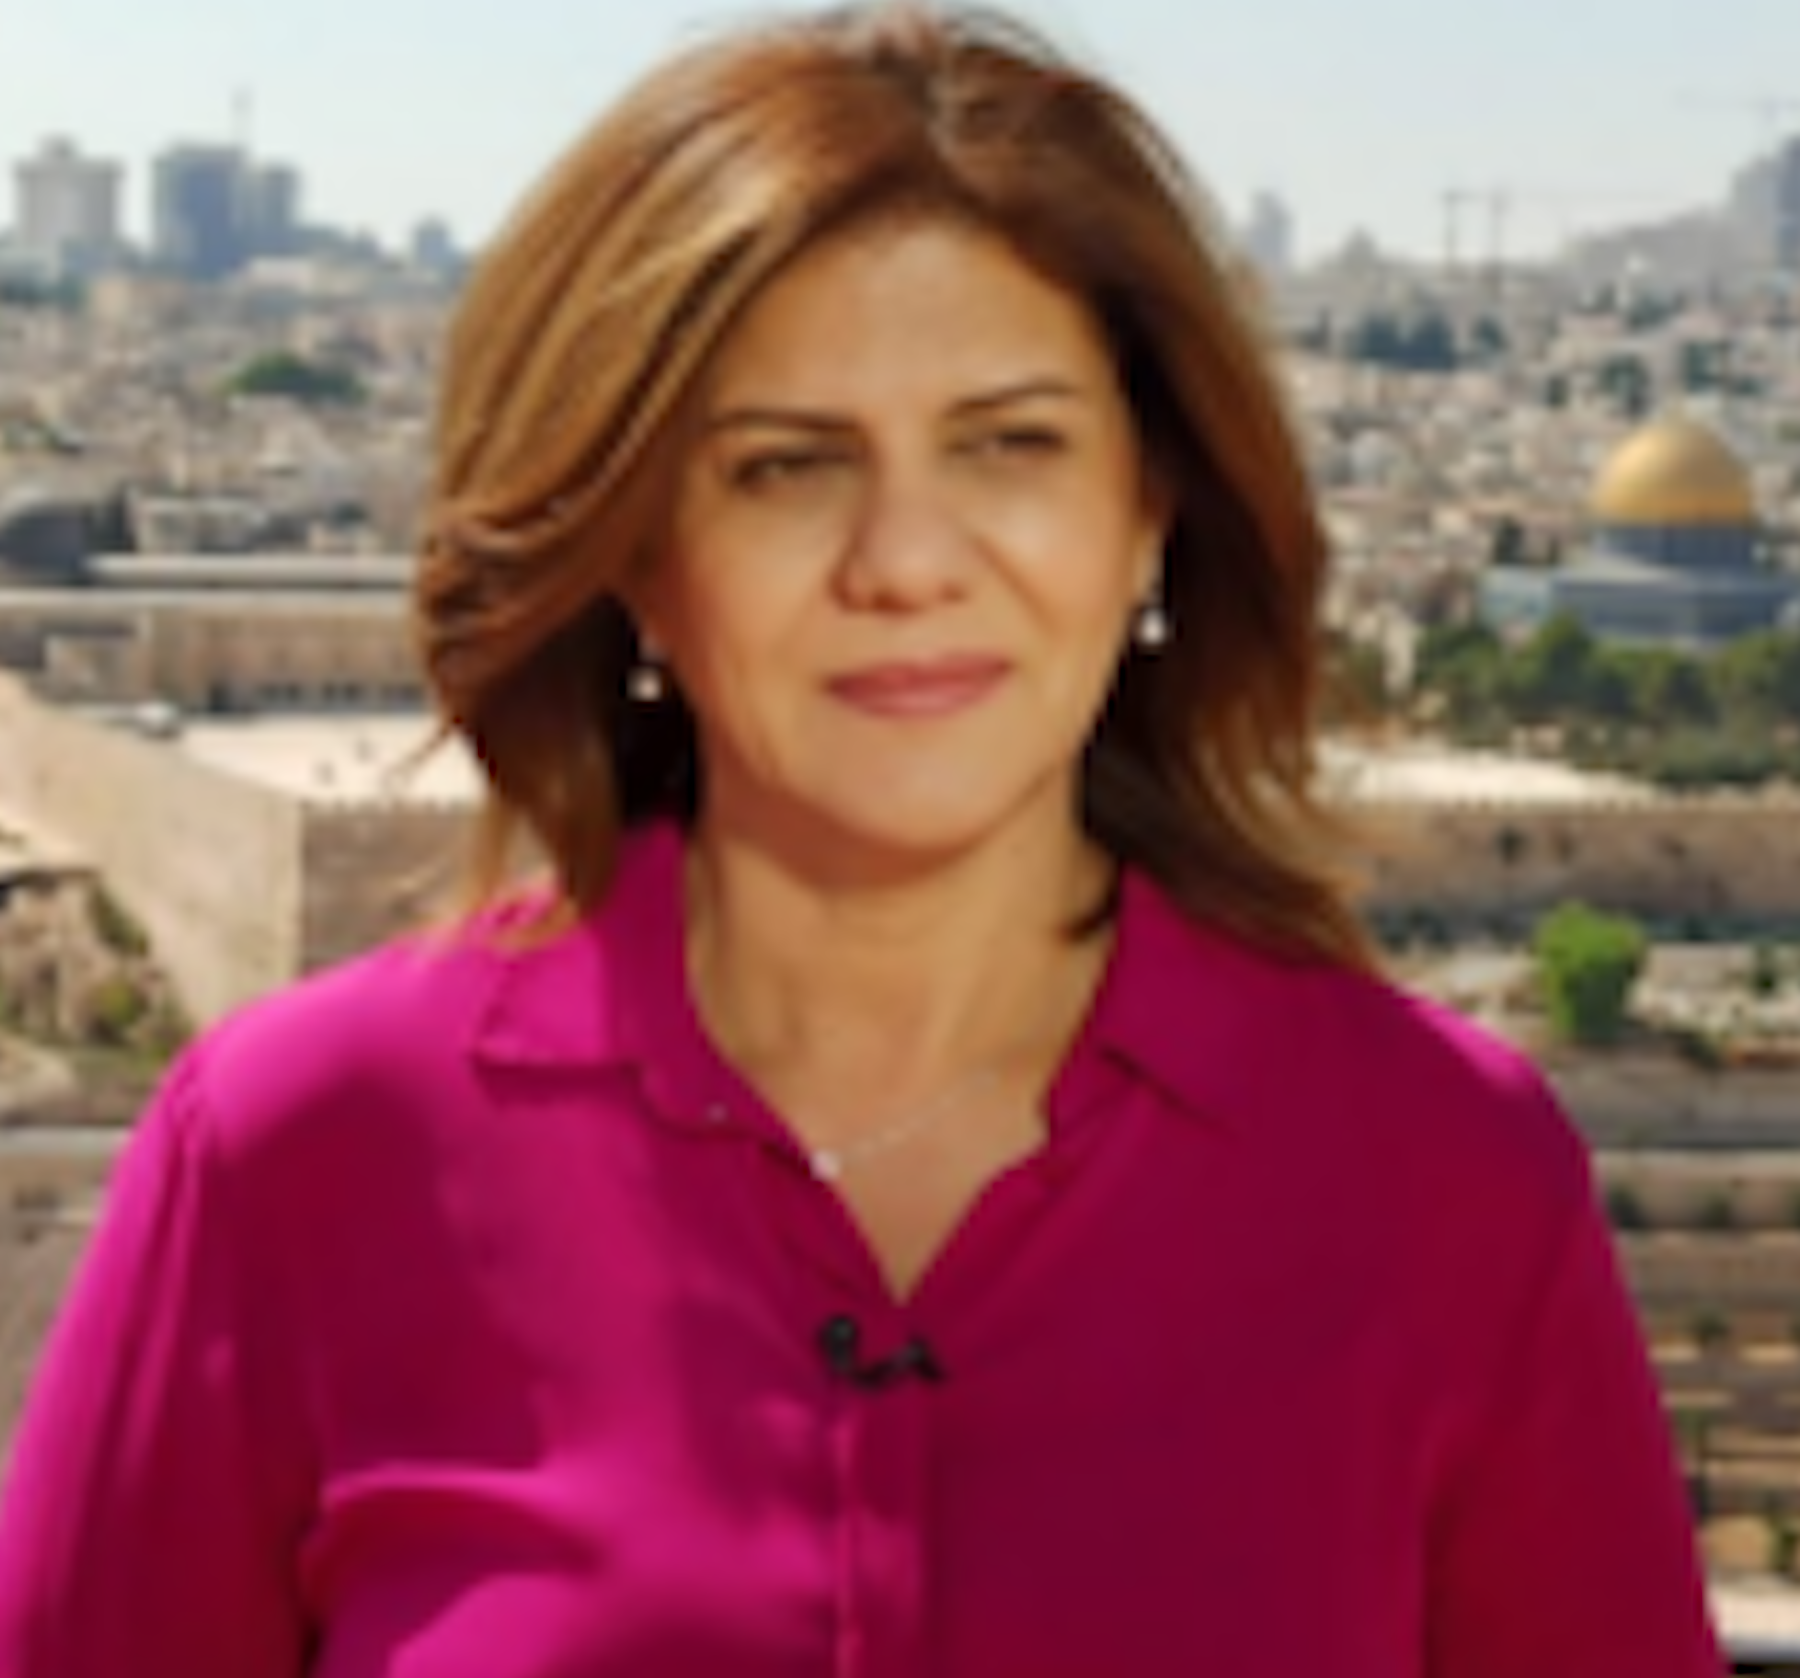 U.S. welcomes IDFâs publication of findings  on Al Jazeera reporterâs death